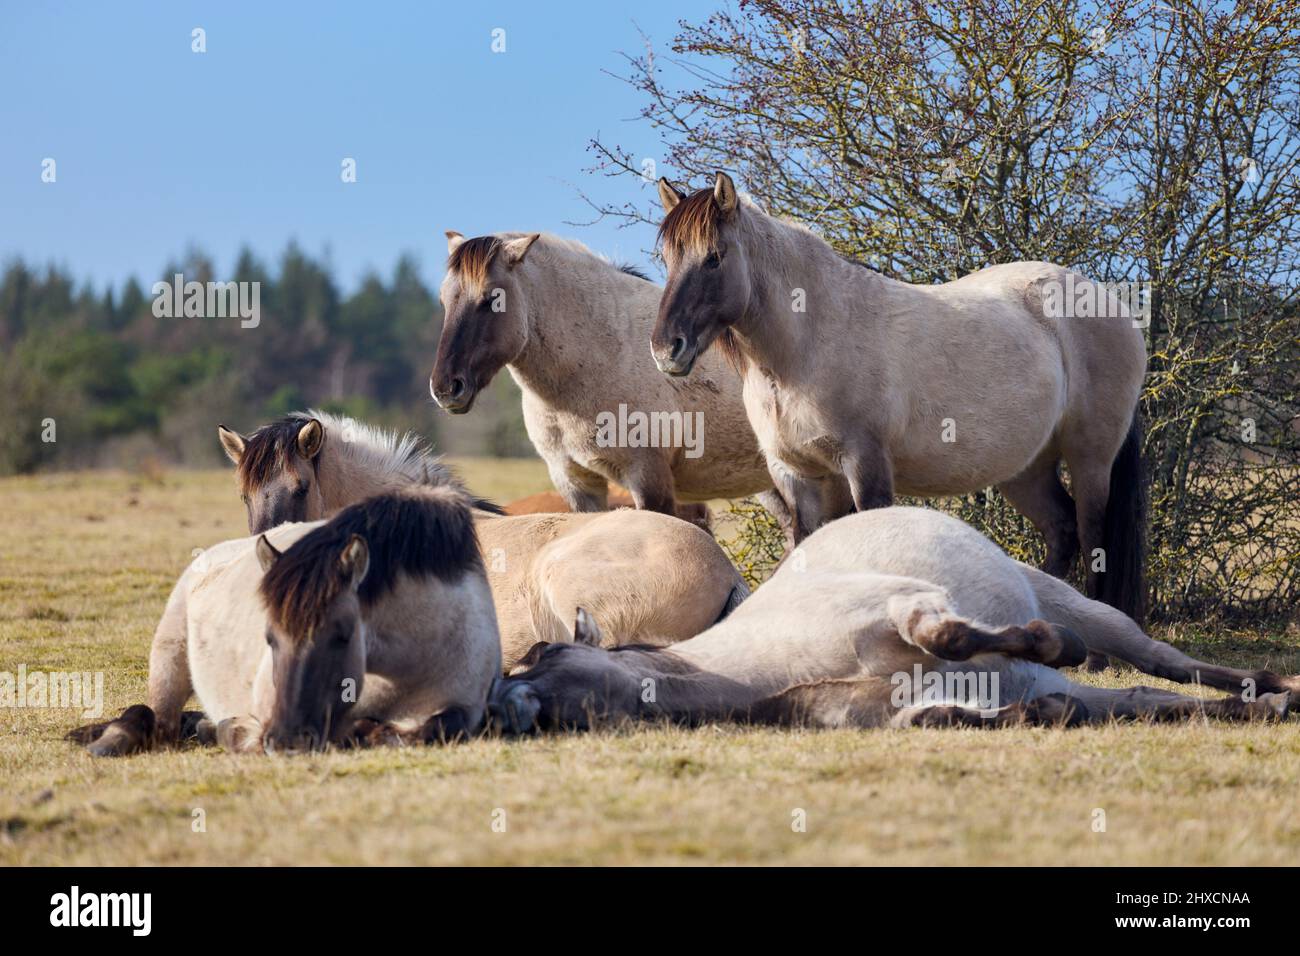 Europe, Germany, Lower Saxony, Cuxhaven. A small group of semi-wild Konik horses (Equus caballus) in the coastal heath. Stock Photo